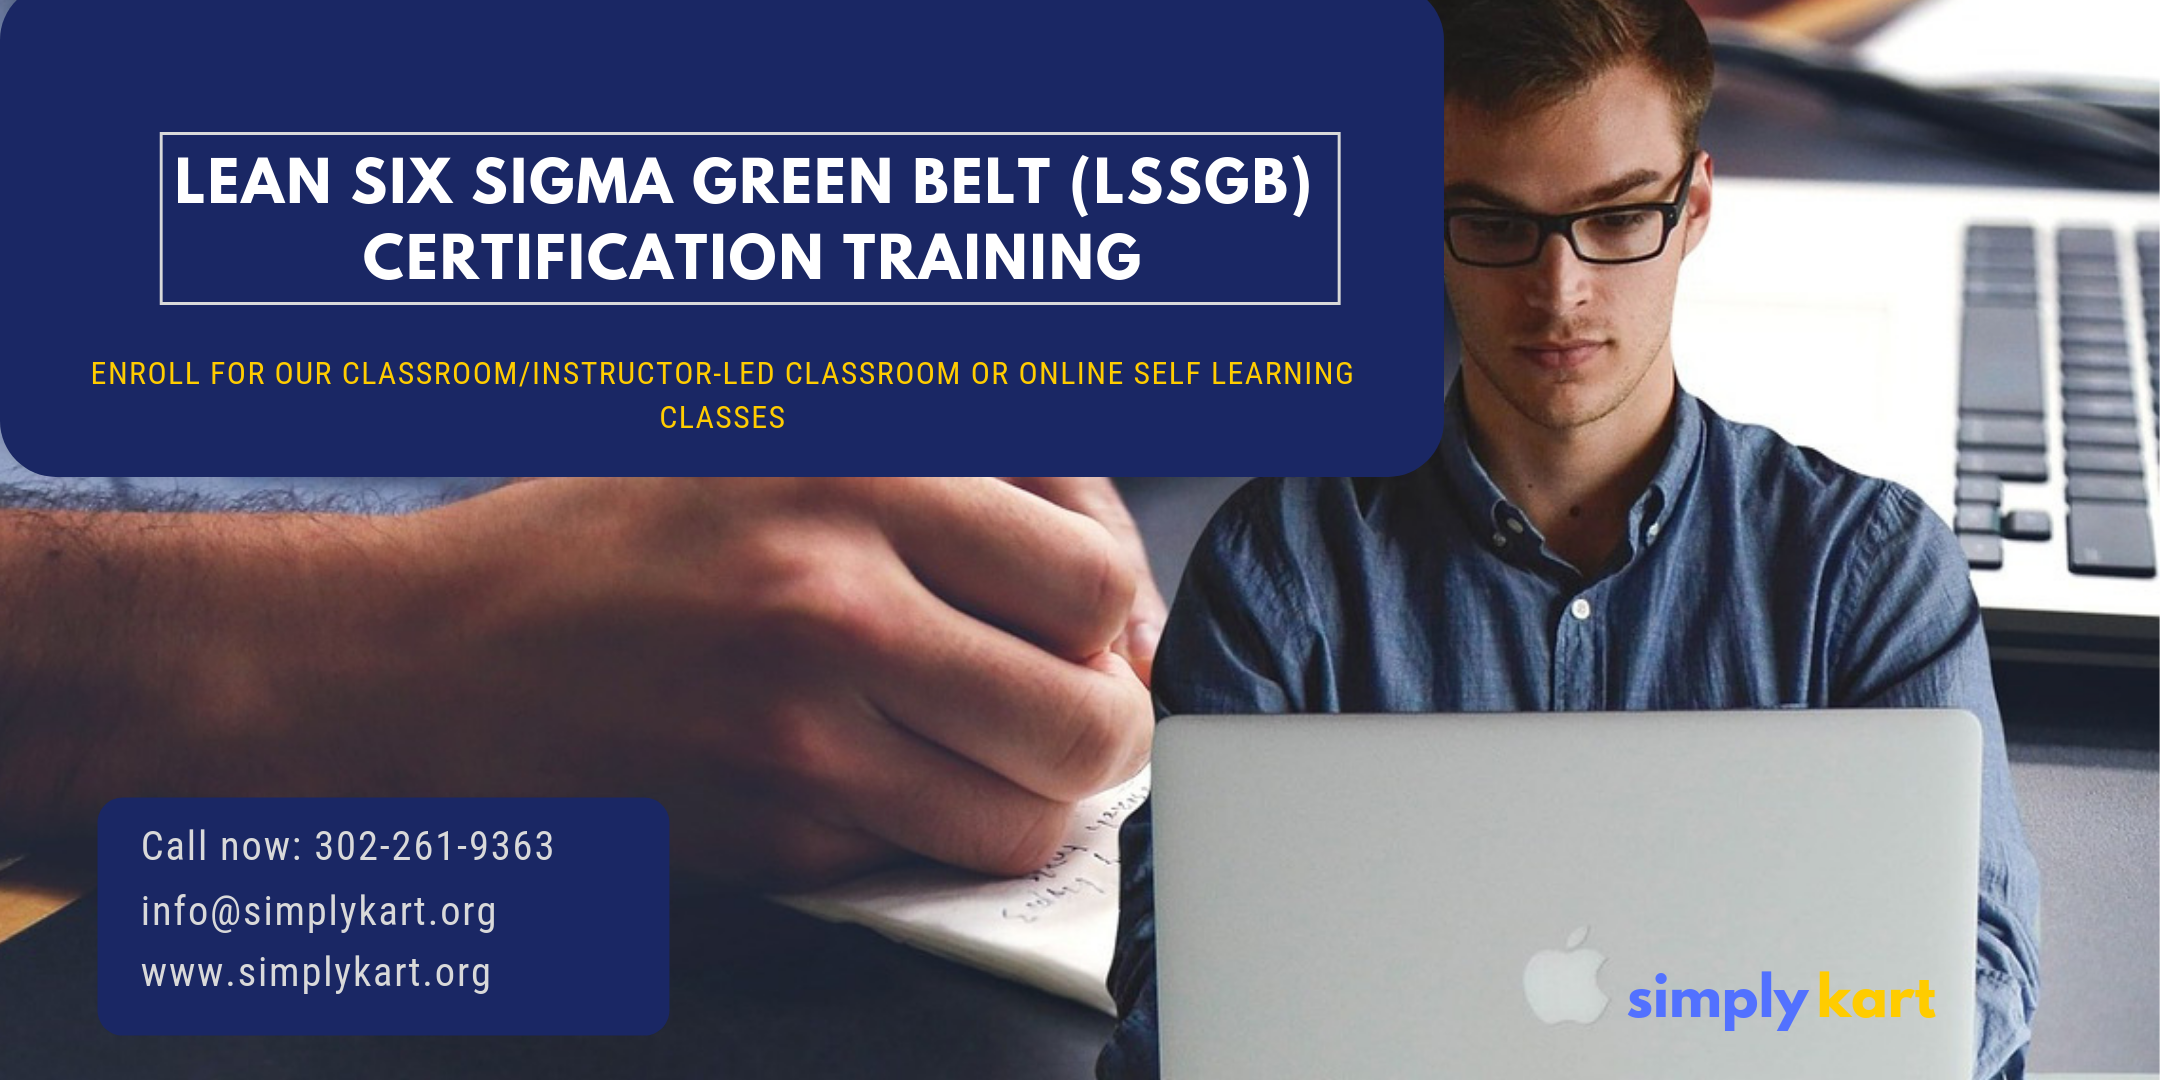 Lean Six Sigma Green Belt (LSSGB) Certification Training in Washington, DC